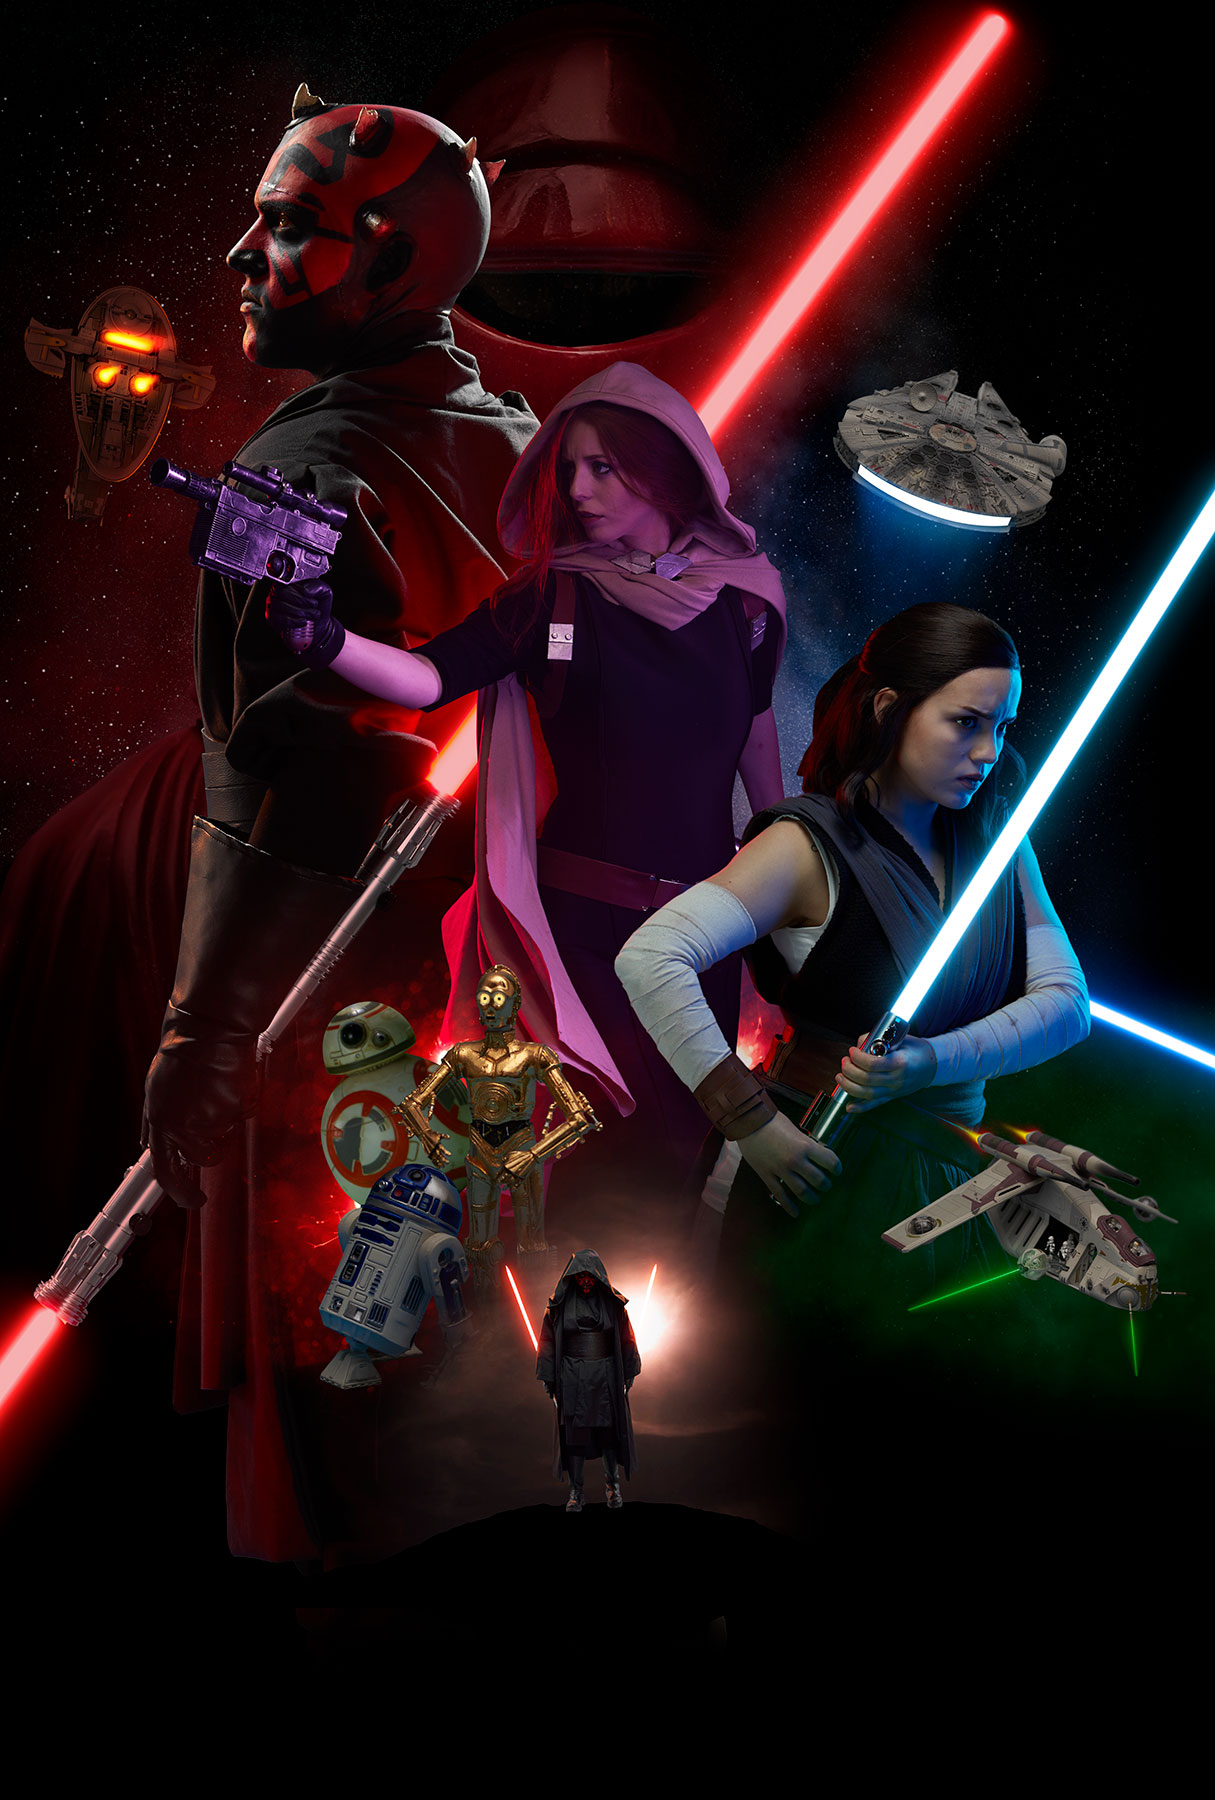 Sayanoff Arthur Star Wars Poster 02 05